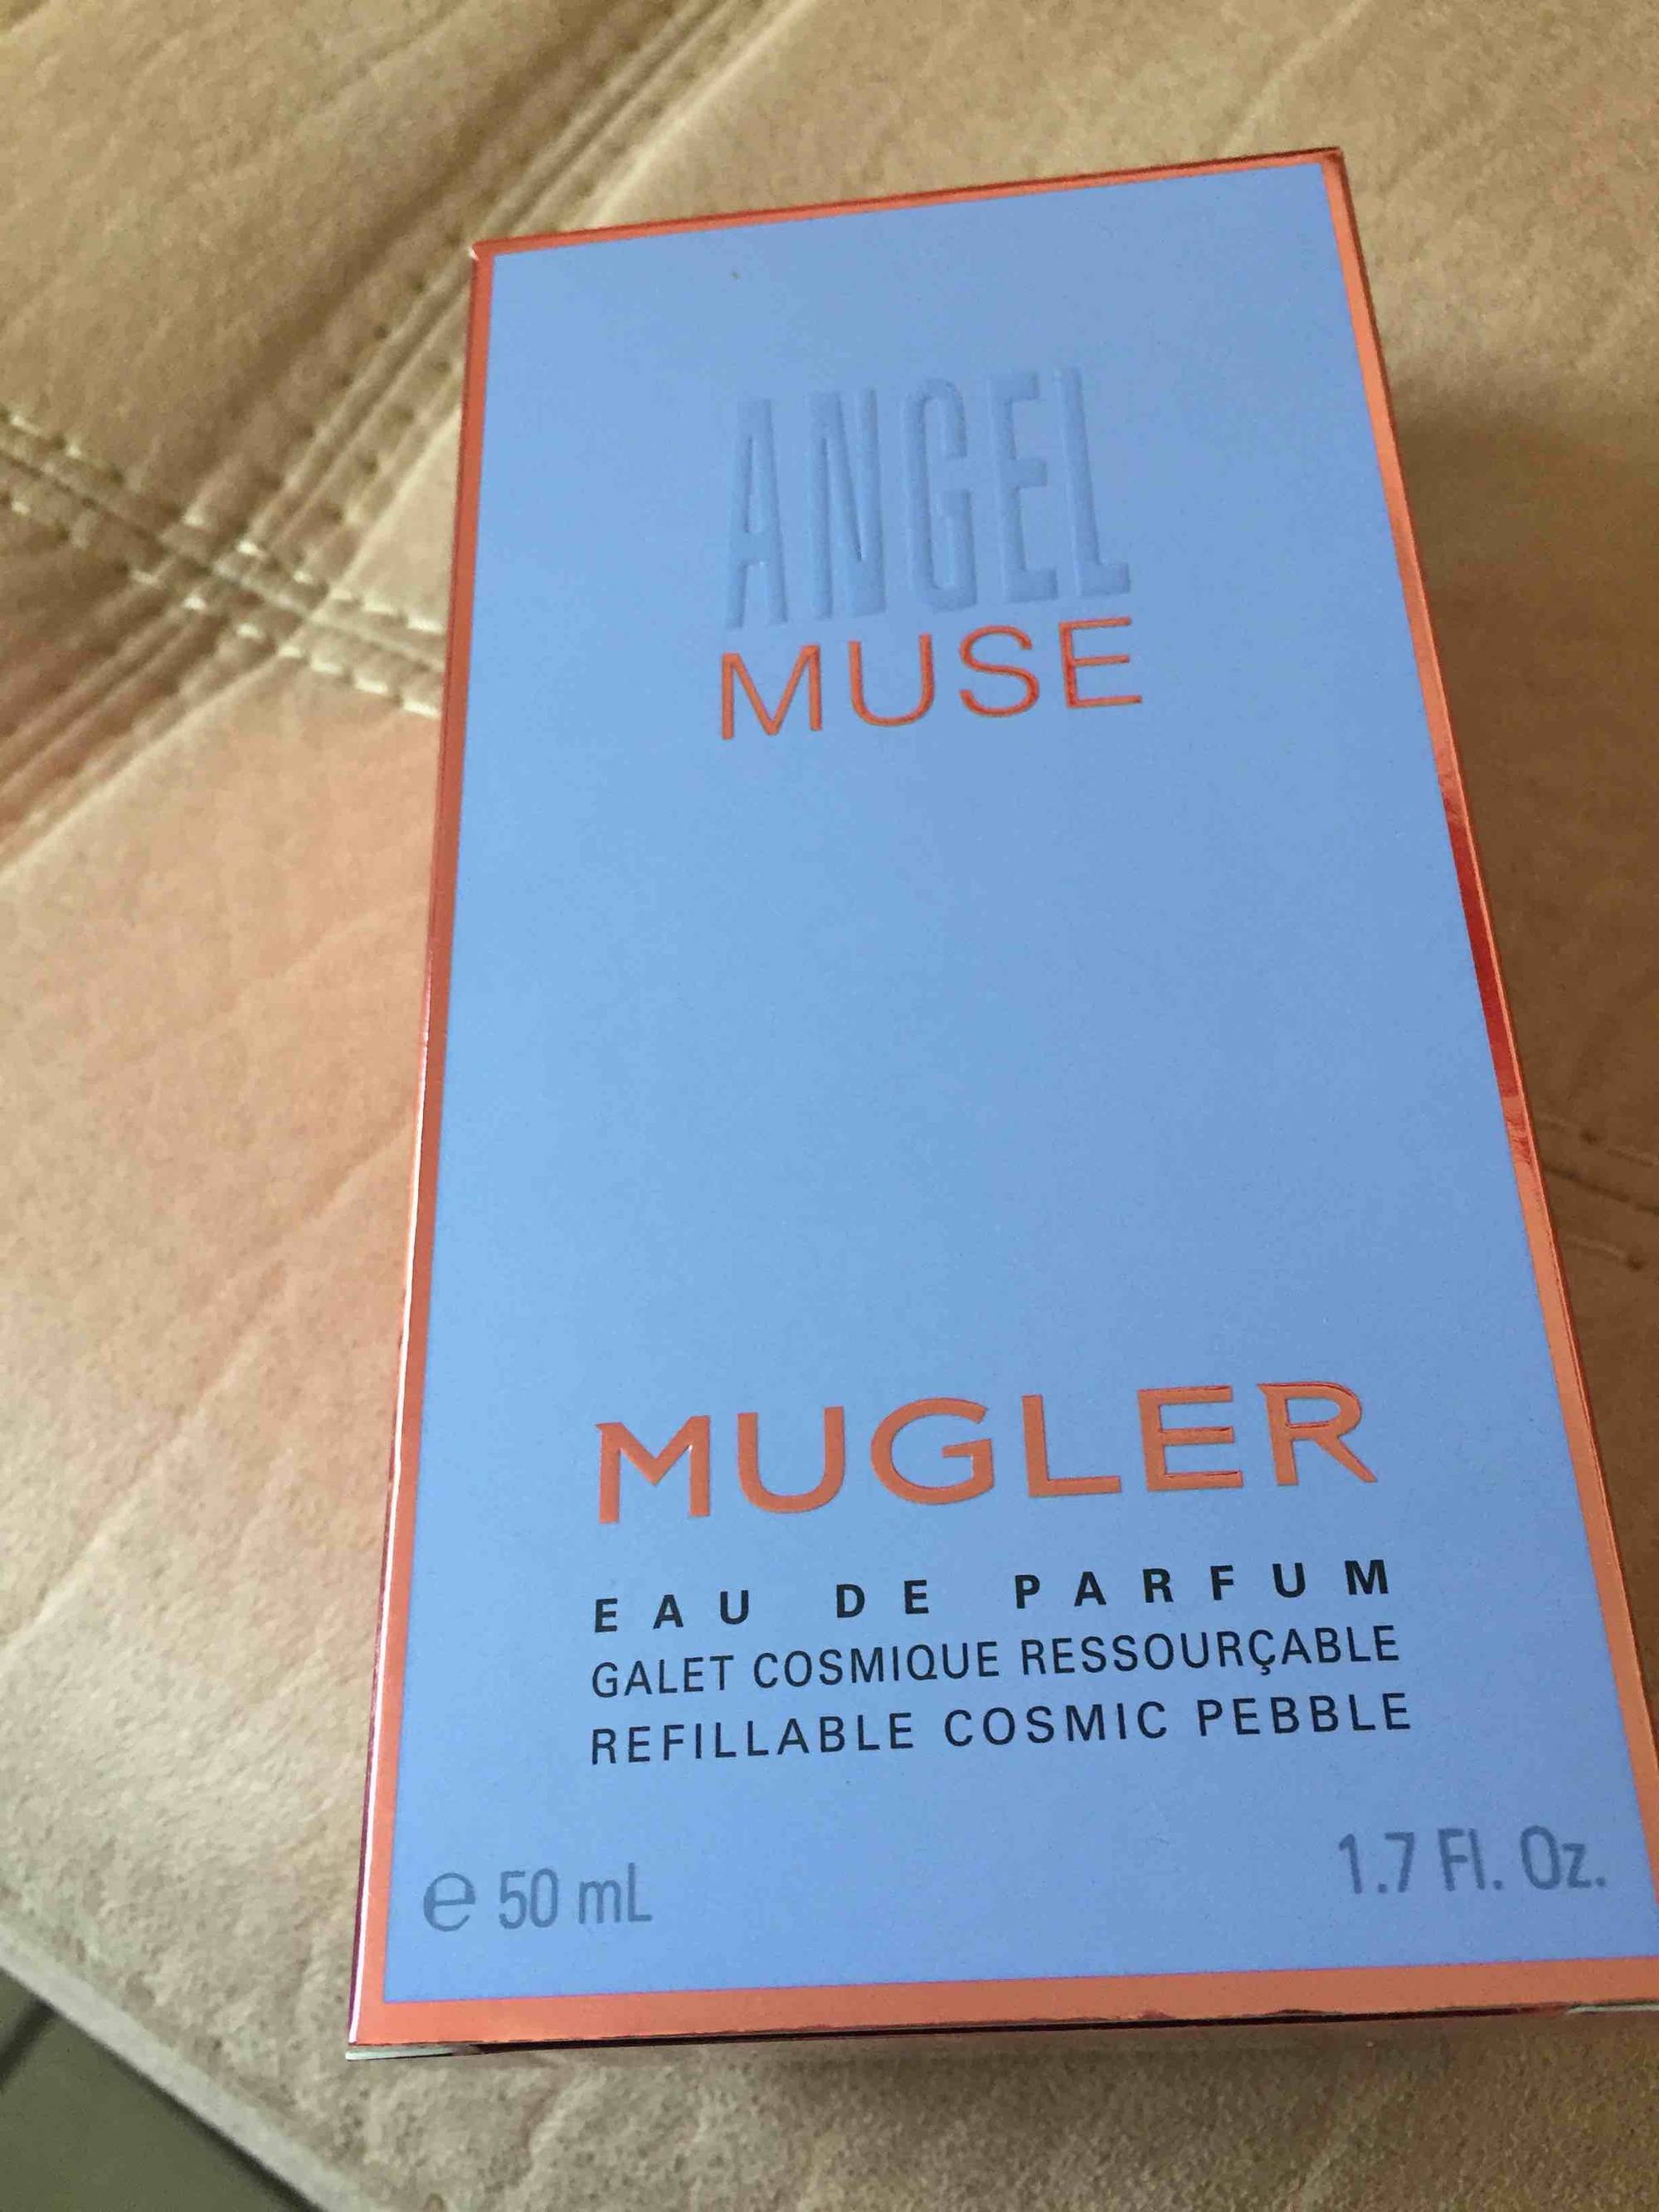 THIERRY MUGLER - Angel muse - Eau de parfum